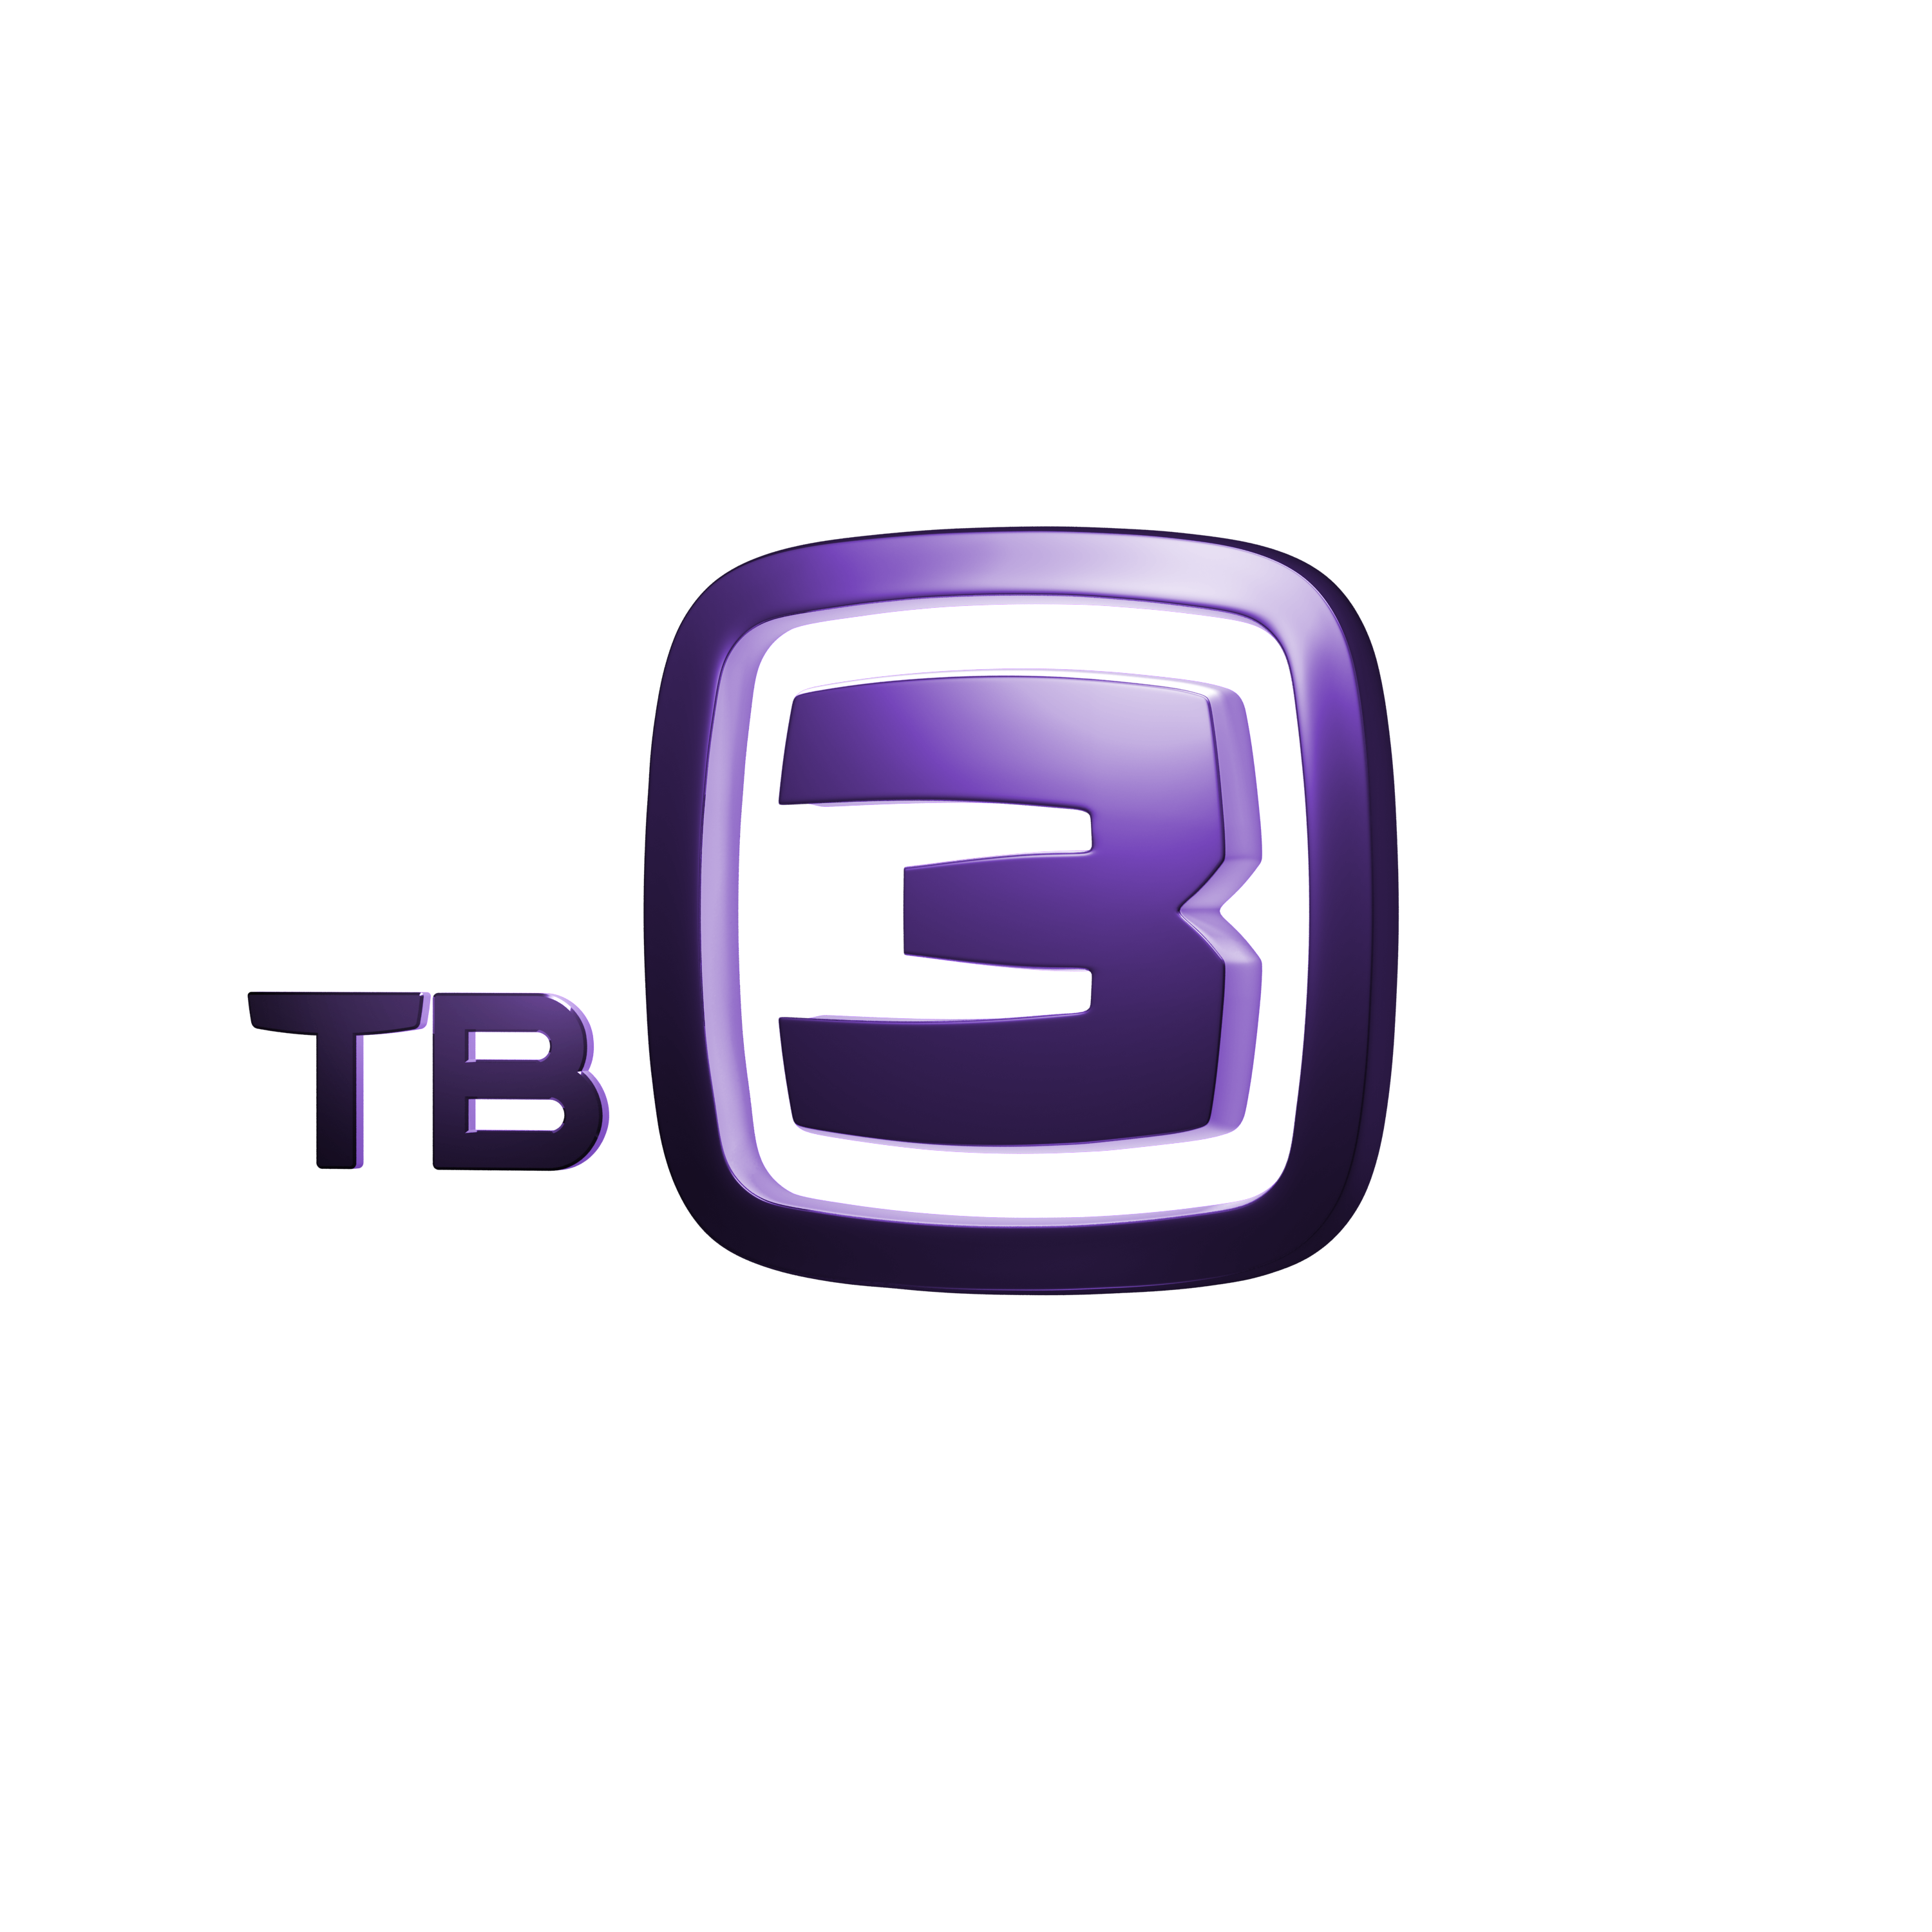 Tyrkplay tv. Тв3 Телеканал логотип. Канал тв3. Эмблема канала тв3. Тв3 логотип 2015.